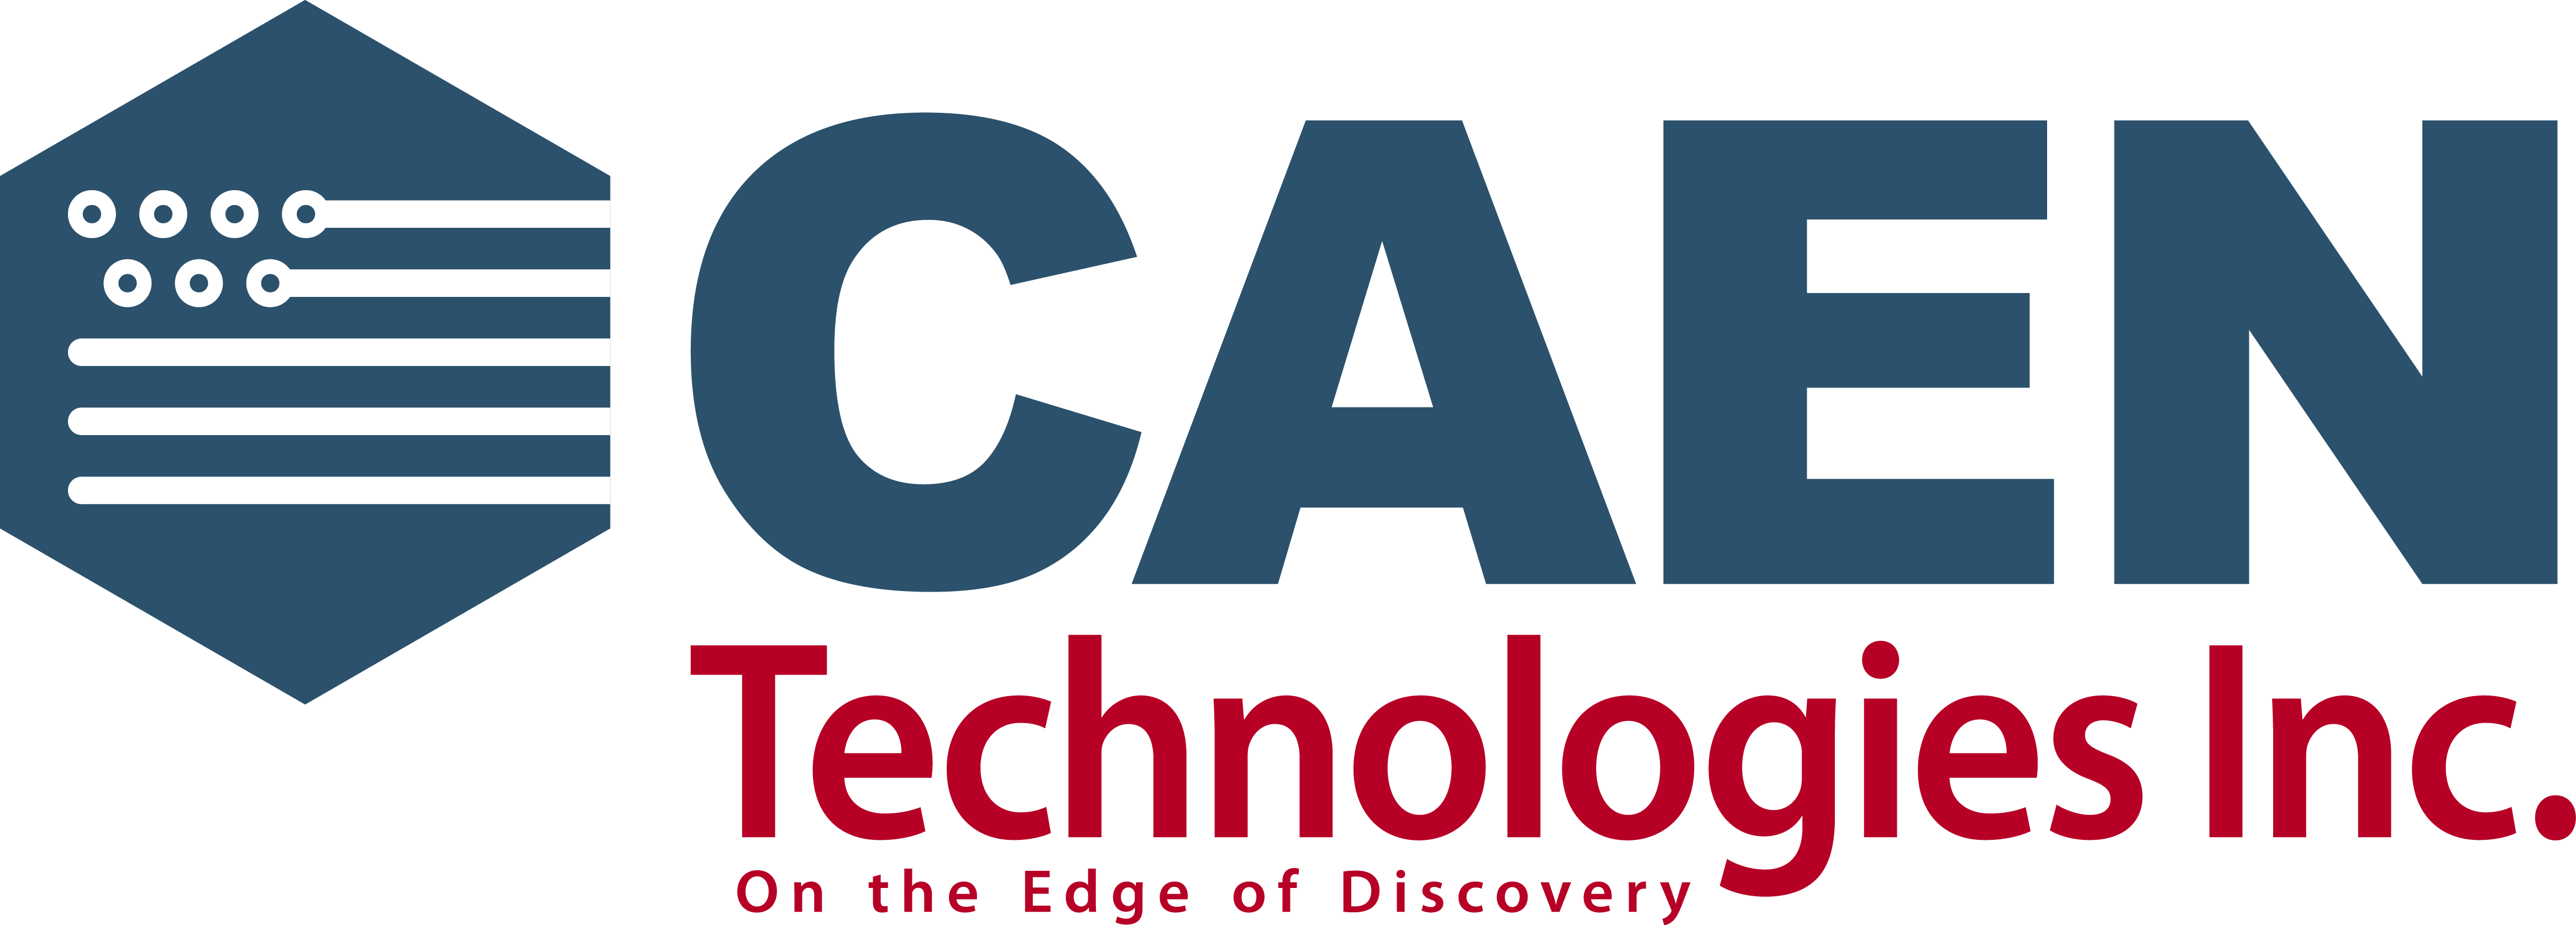 CAEN Technologies Inc. logo